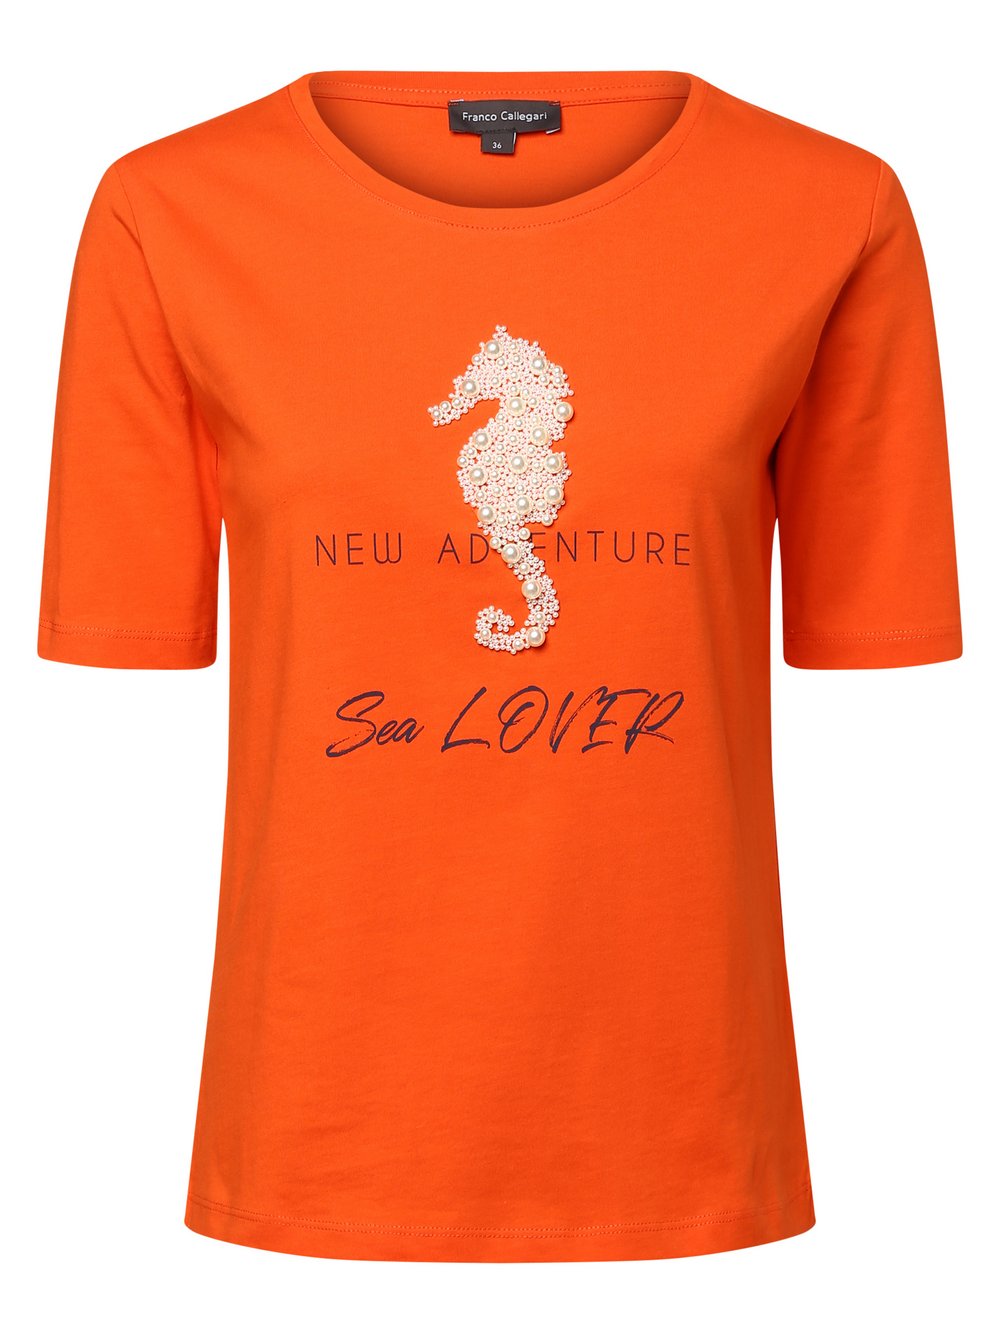 Franco Callegari - T-shirt damski, pomarańczowy